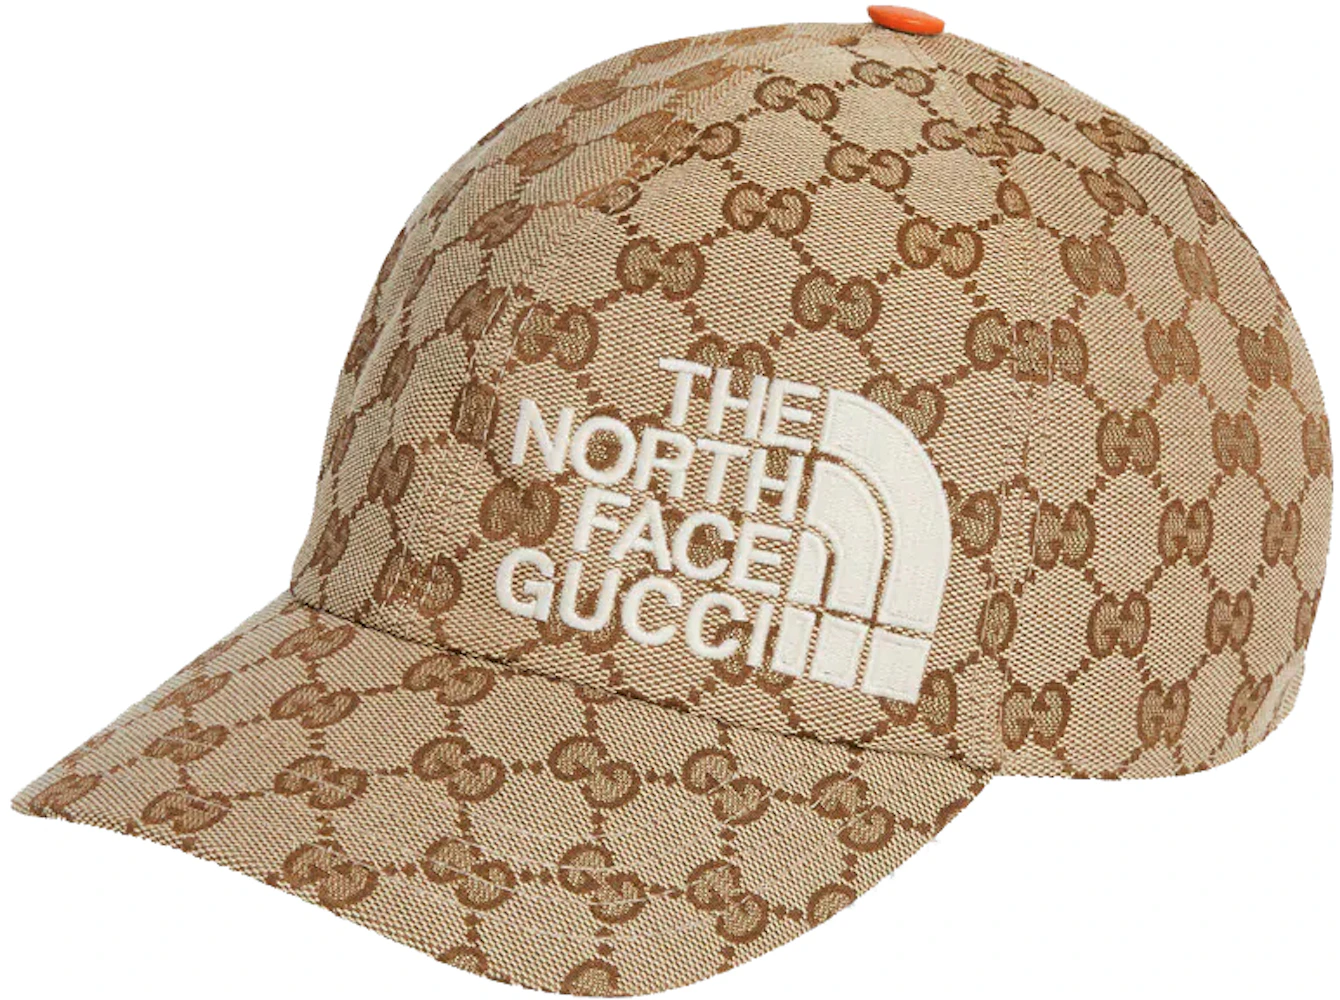 The North Face Gucci 